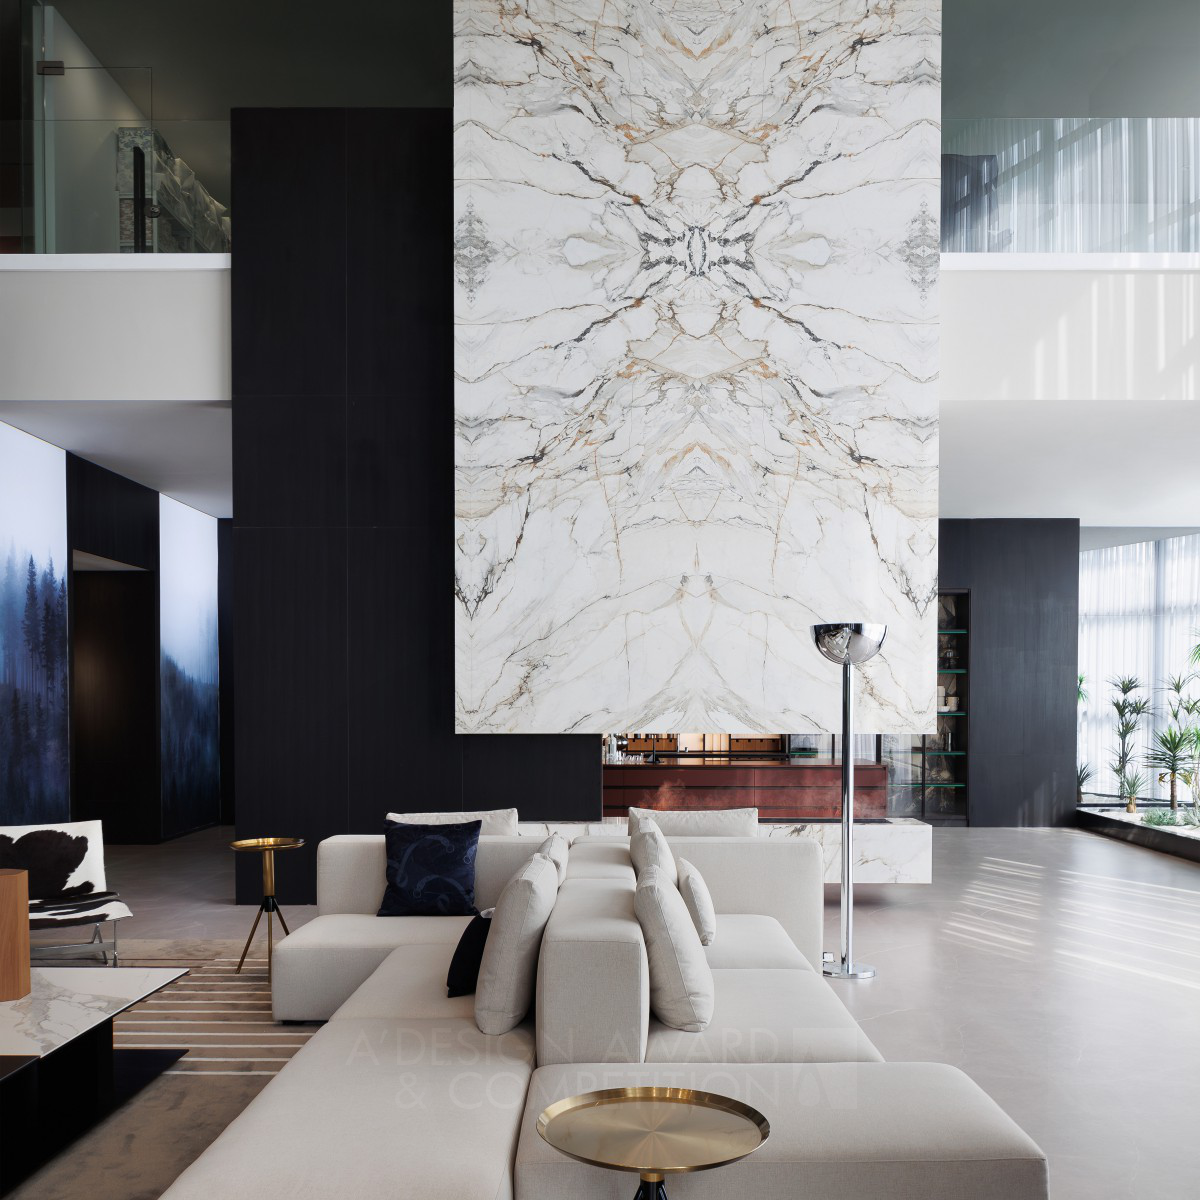 Ming Ye wins Silver at the prestigious A' Interior Space, Retail and Exhibition Design Award with Boloni Home Interior Design.